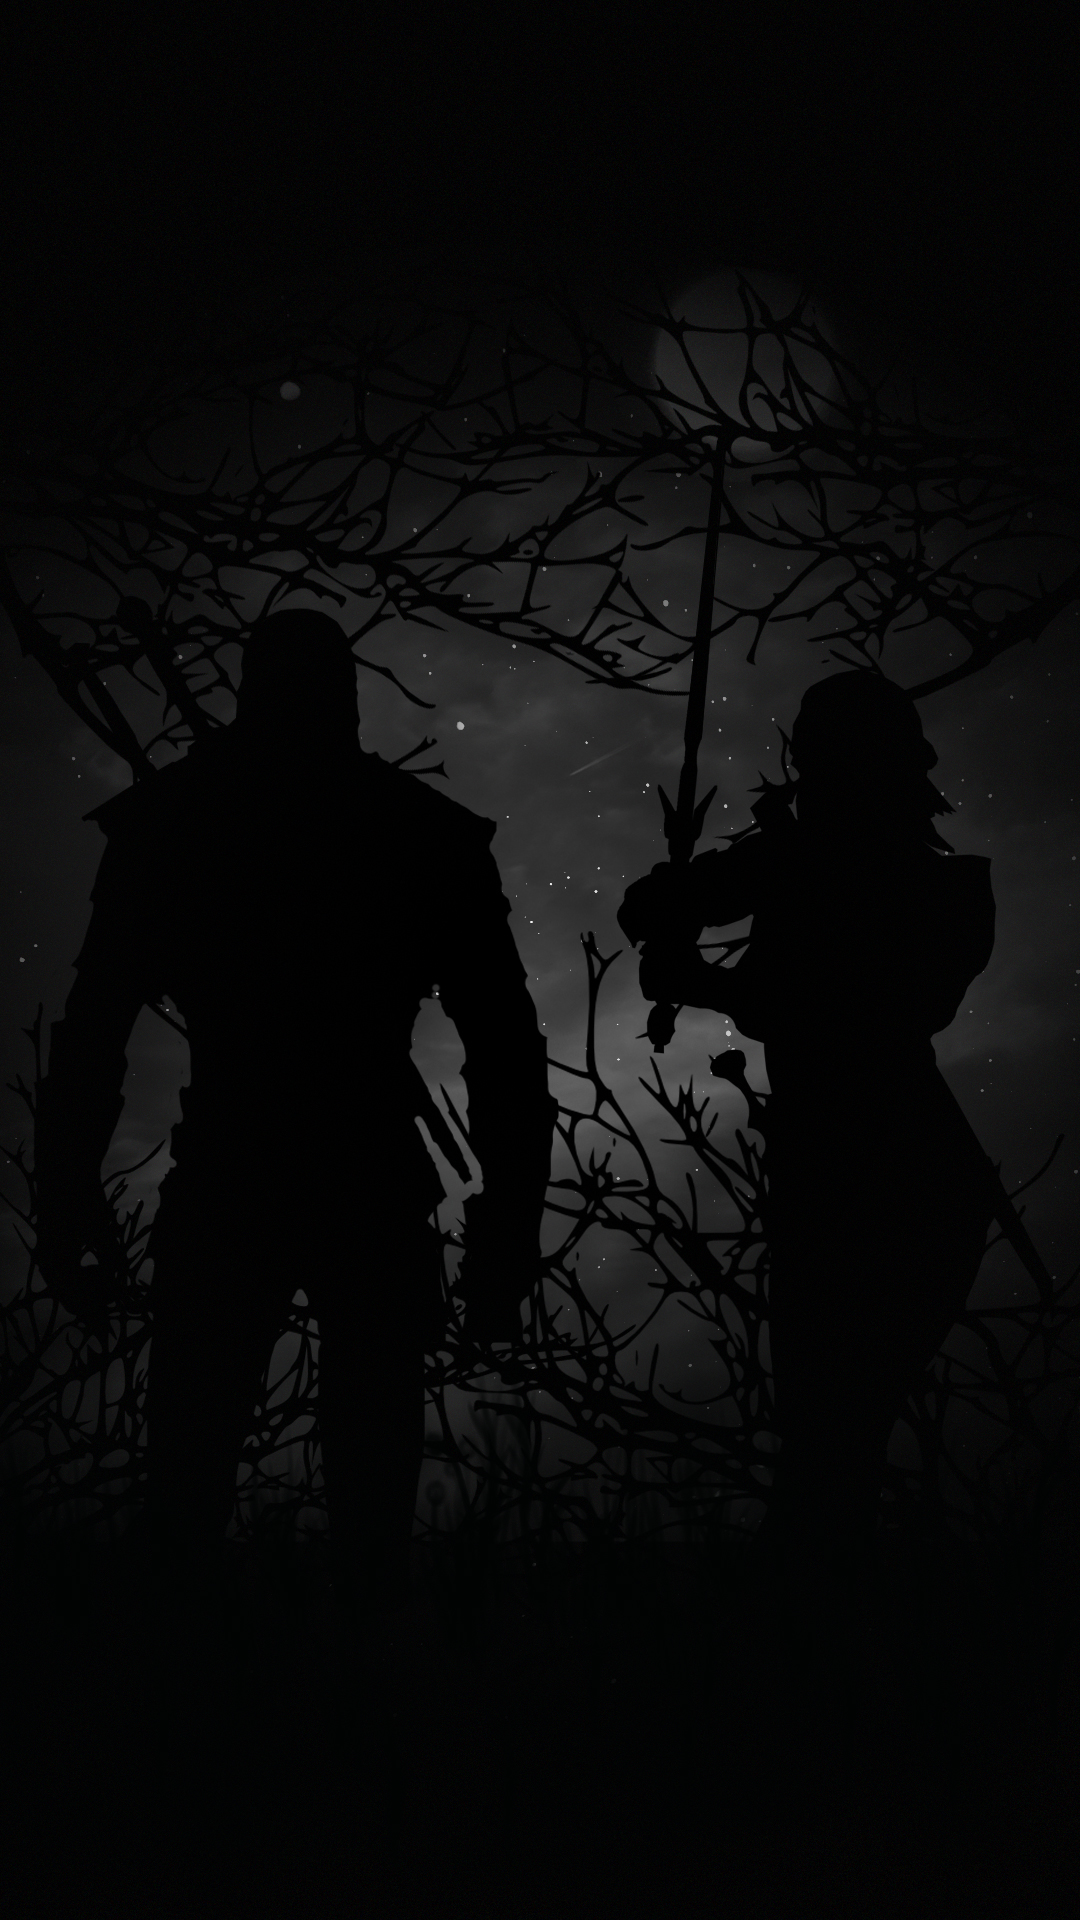 Geralt & Ciri Night Hunt by Starfade